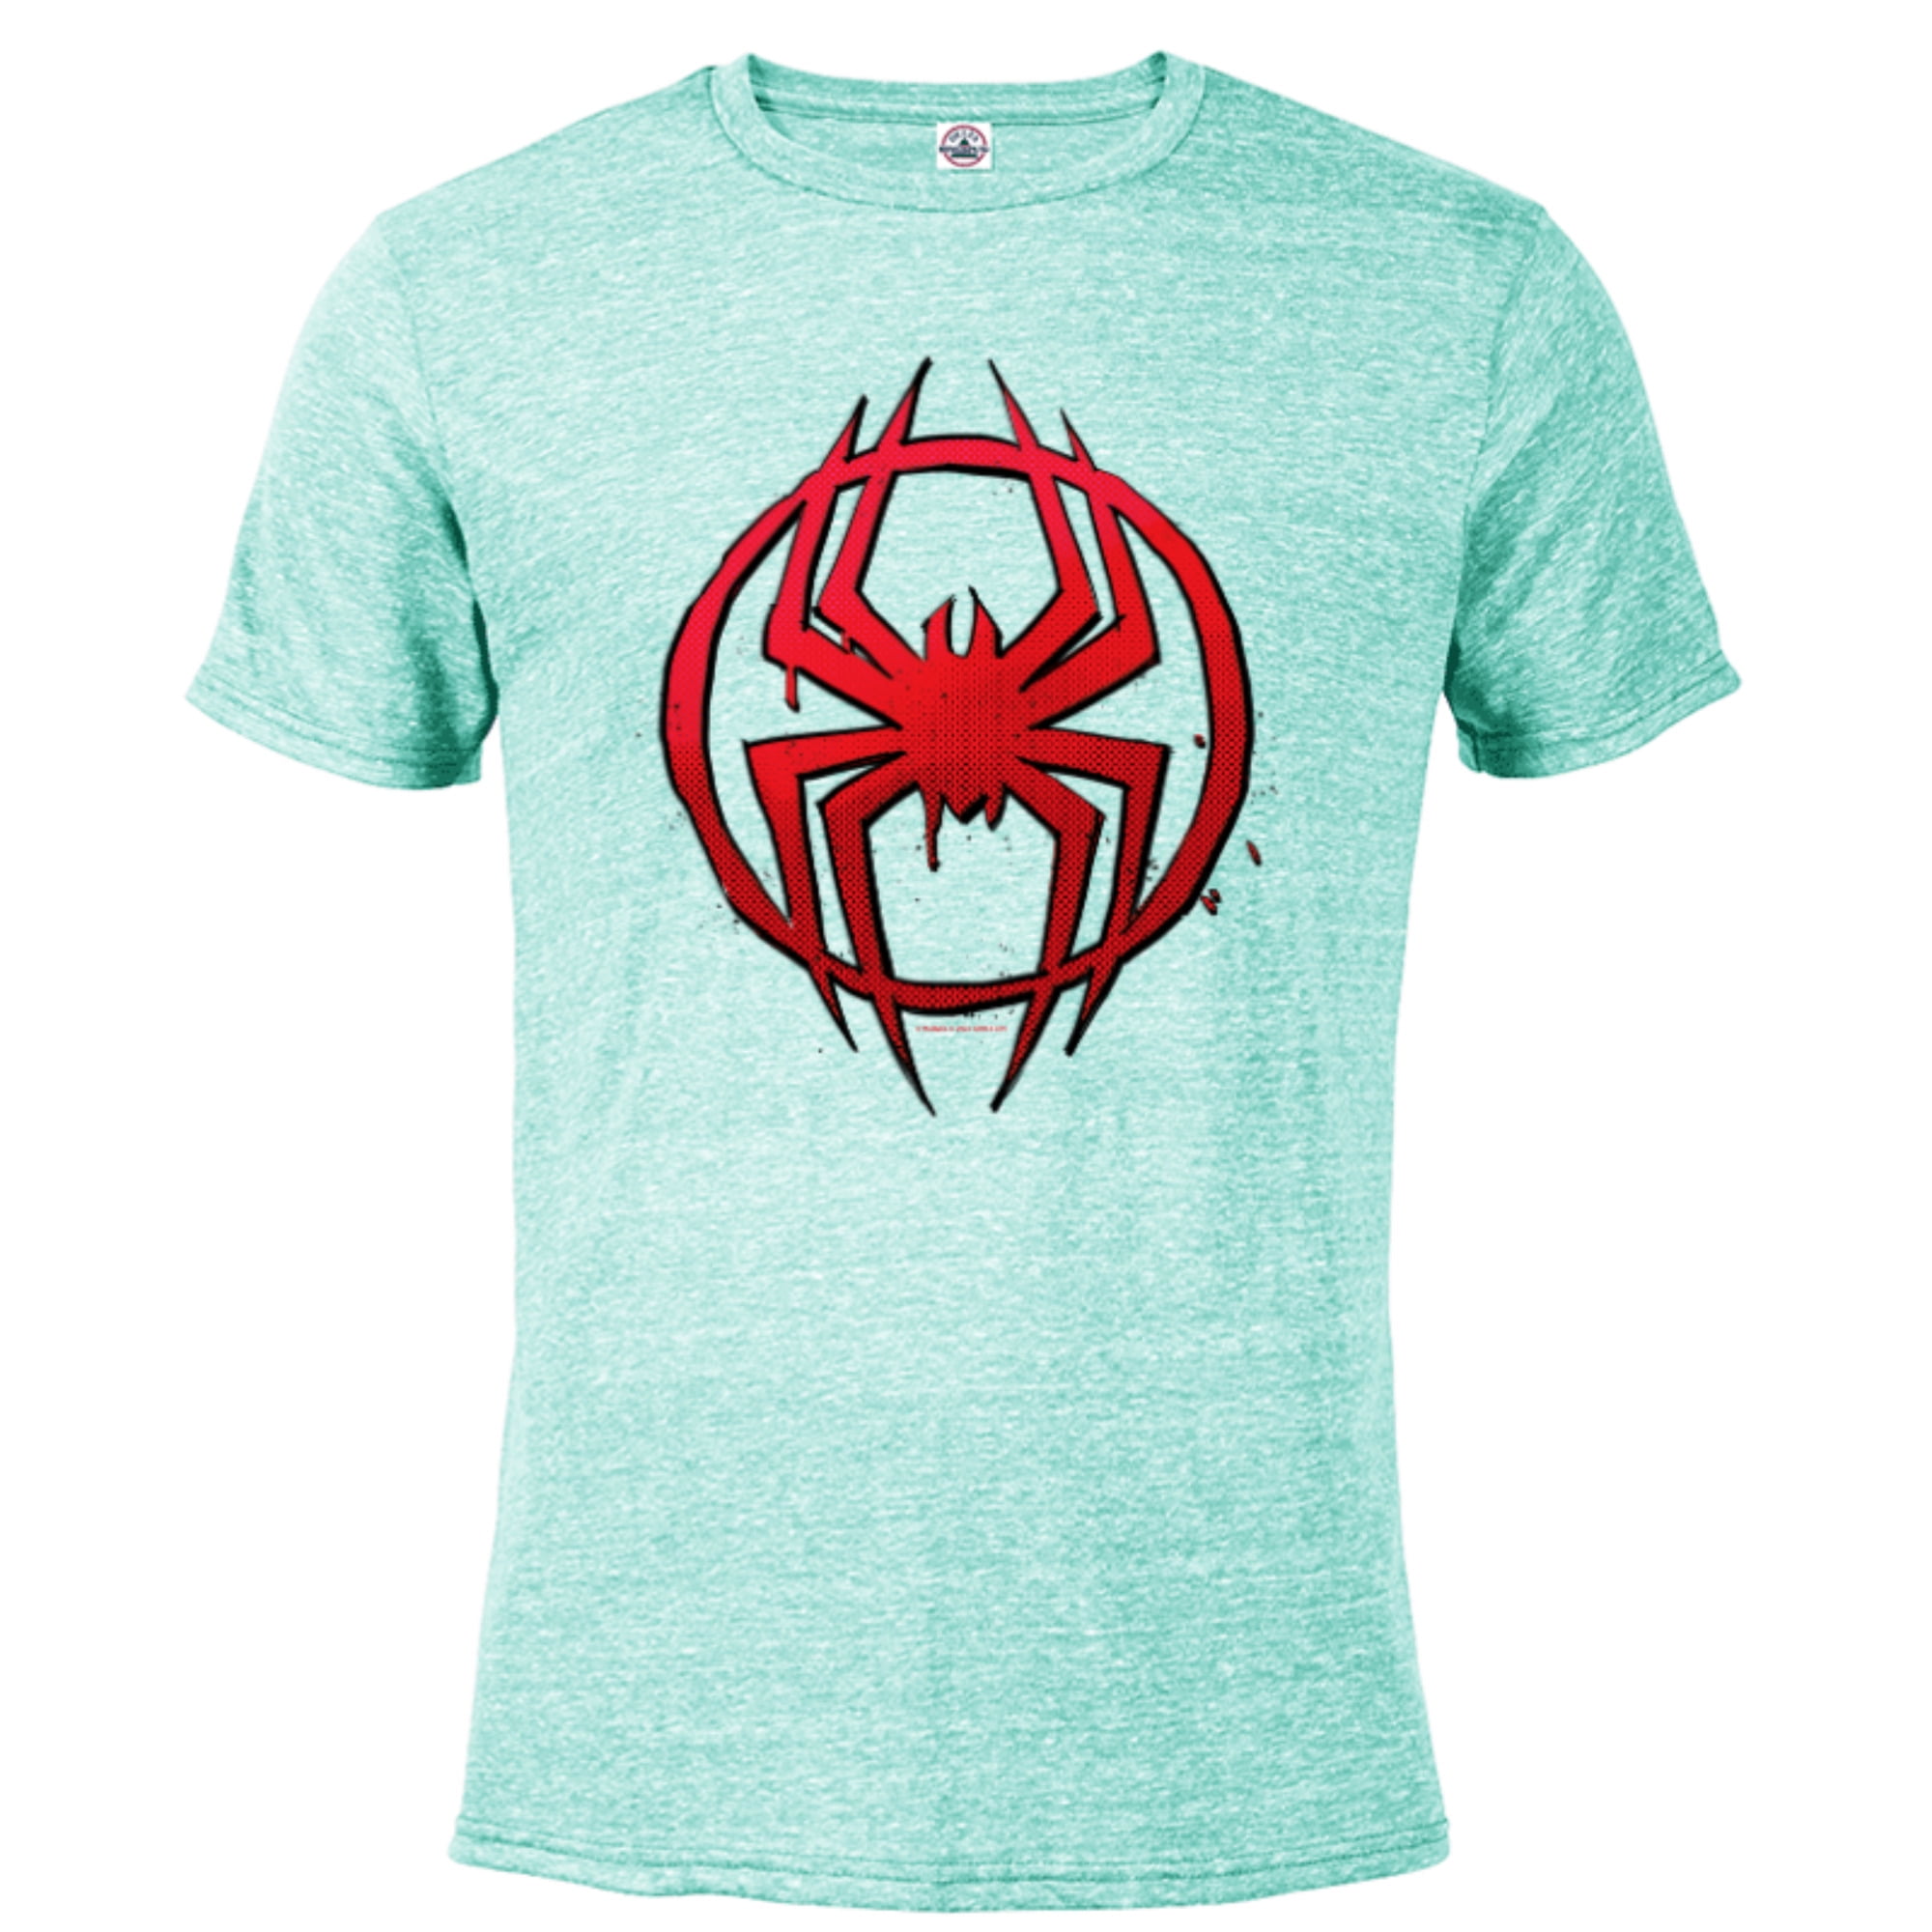 Marvel Amazing Spider-man Graphic Short Sleeve T-shirt Adult Size L Blue